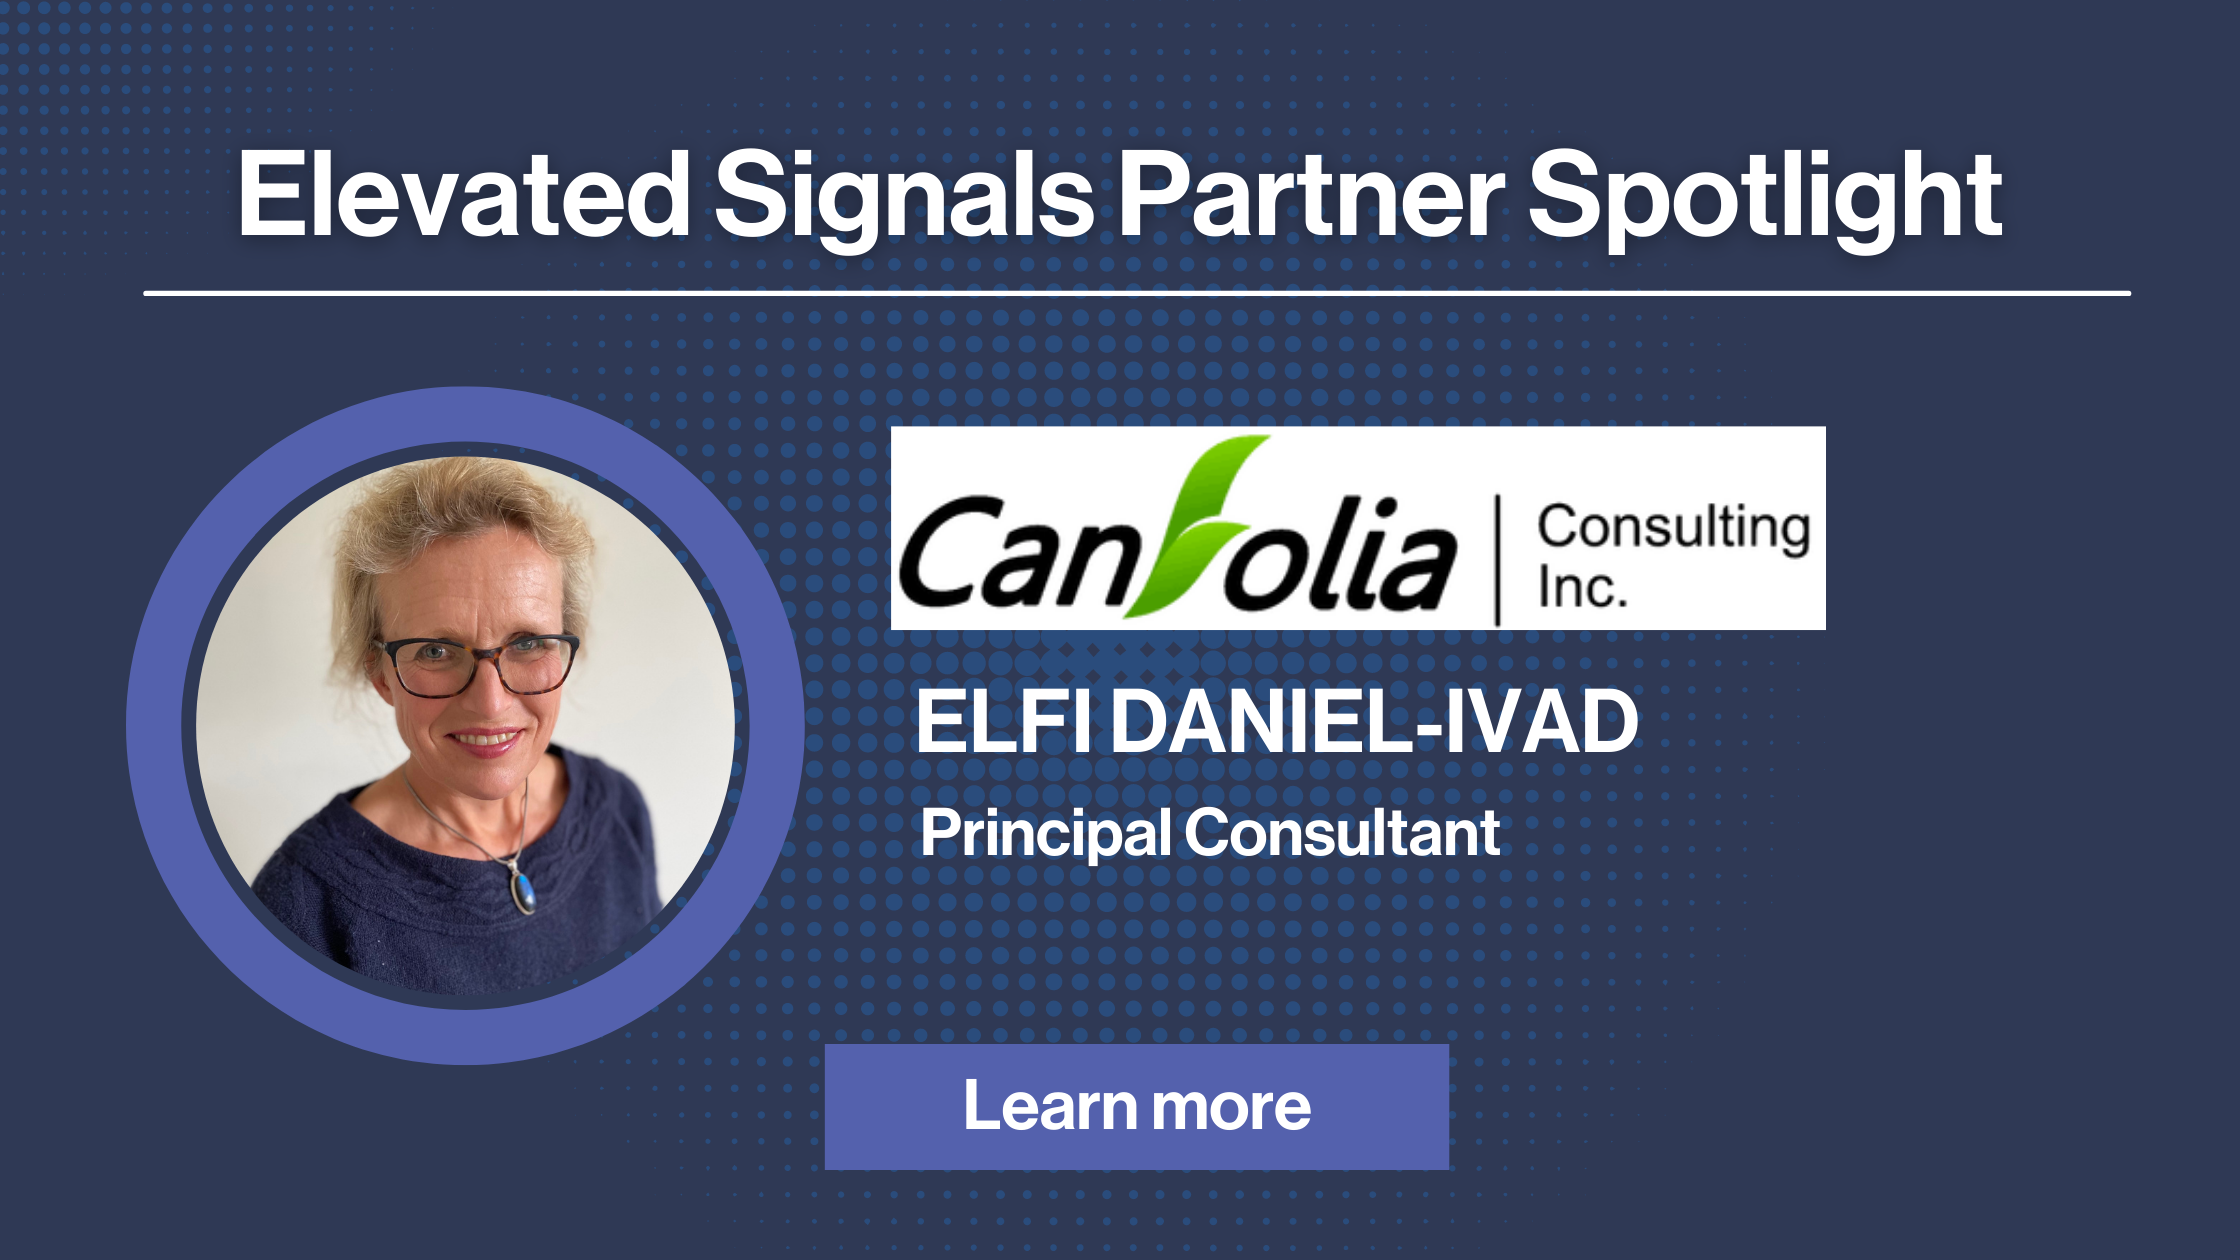 Elfi Daniel-Ivad, Founder and Principa Consultant at Canfolia Consulting Inc.